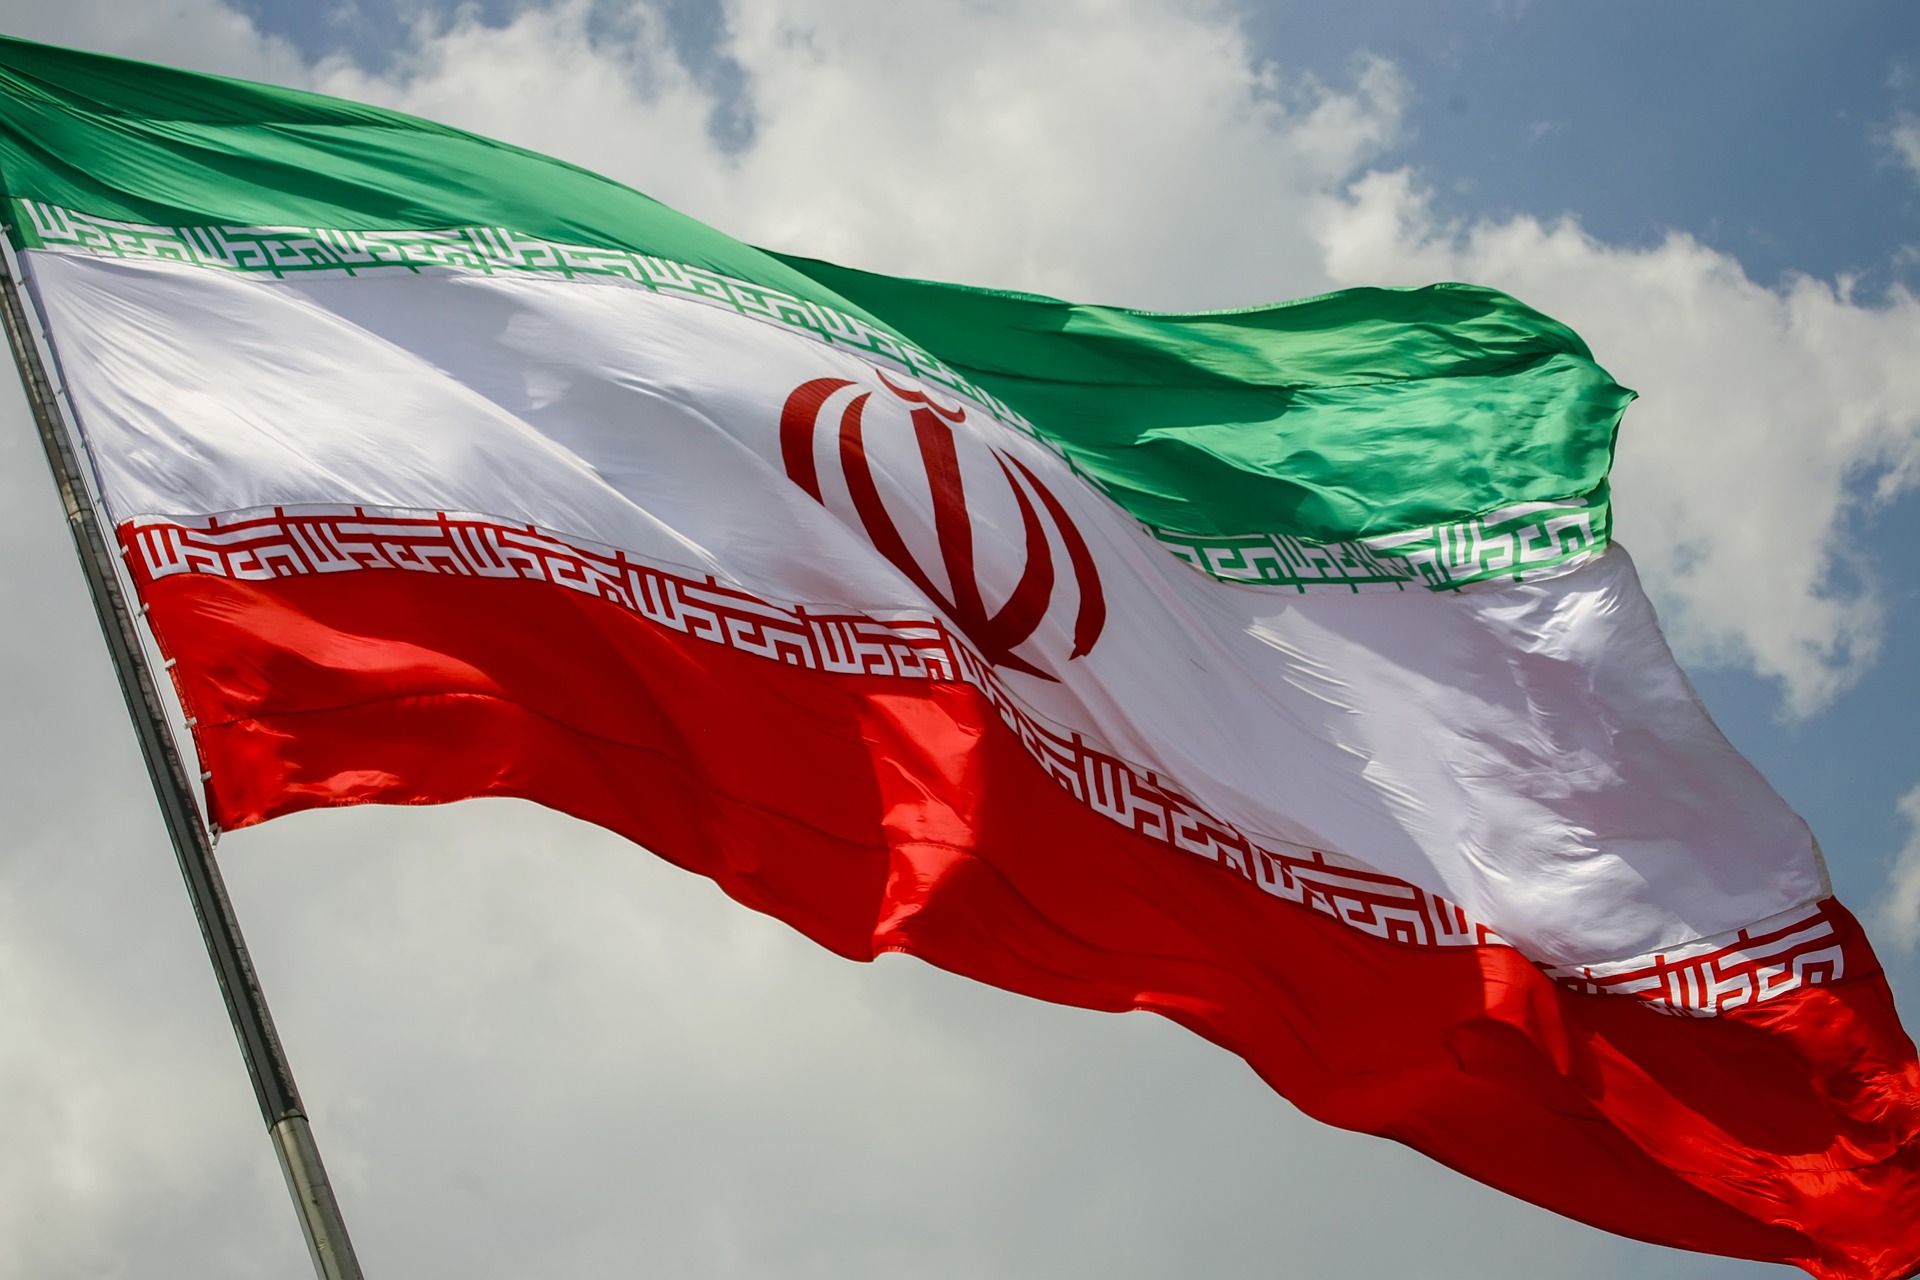 Iran’s ambassador discusses reasons for recent unrest in Iran